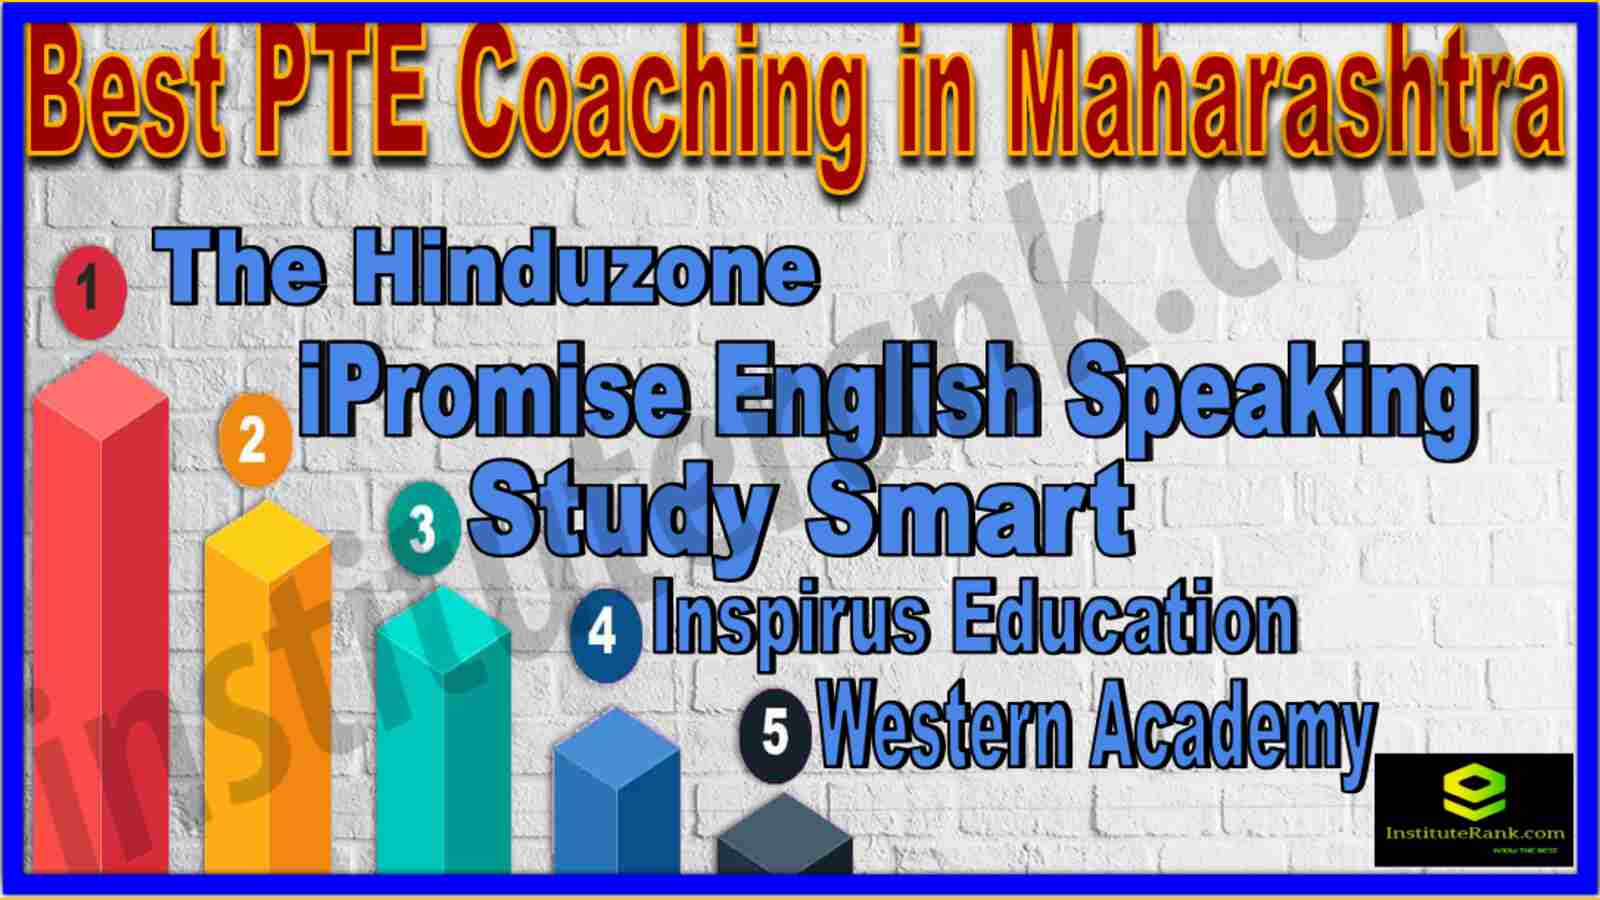 Best PTE Coaching In Maharashtra